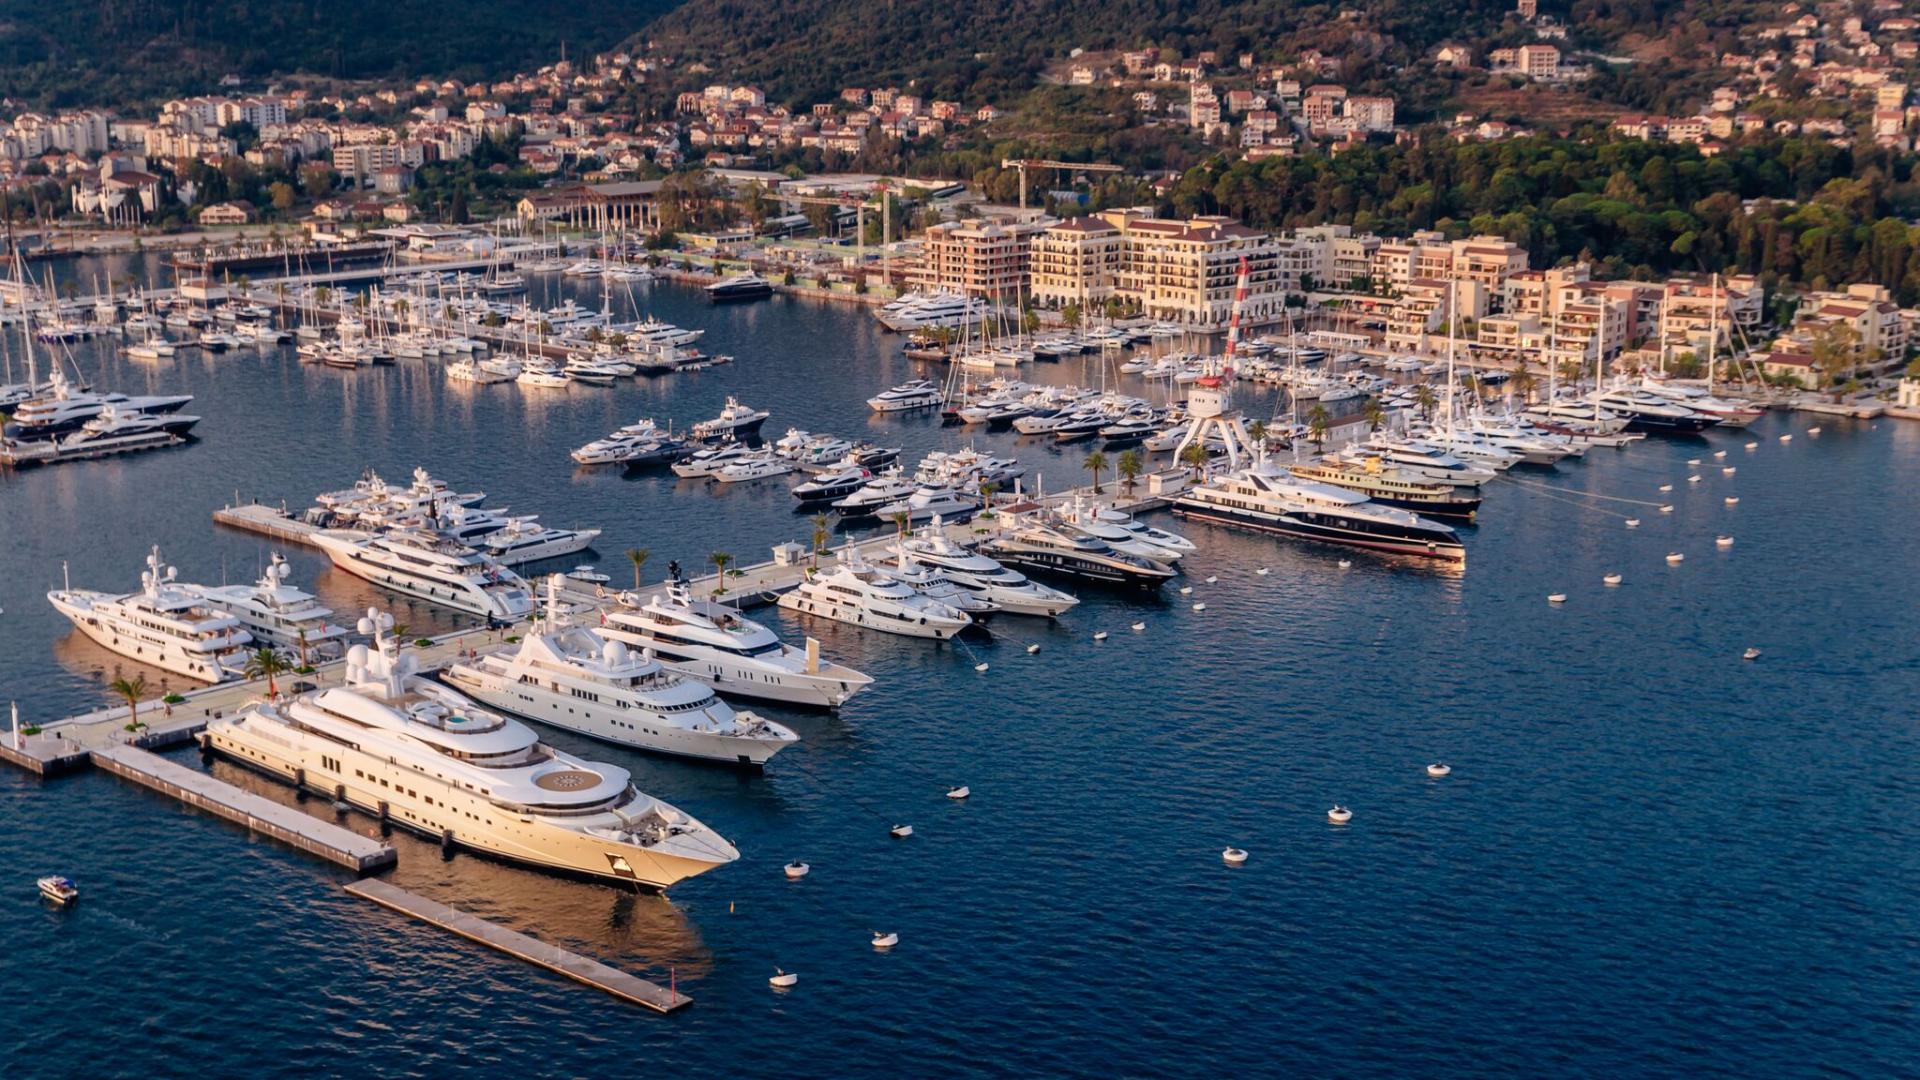 Porto Montenegro, the Mediterranean’s leading luxury yacht homeport and marina village